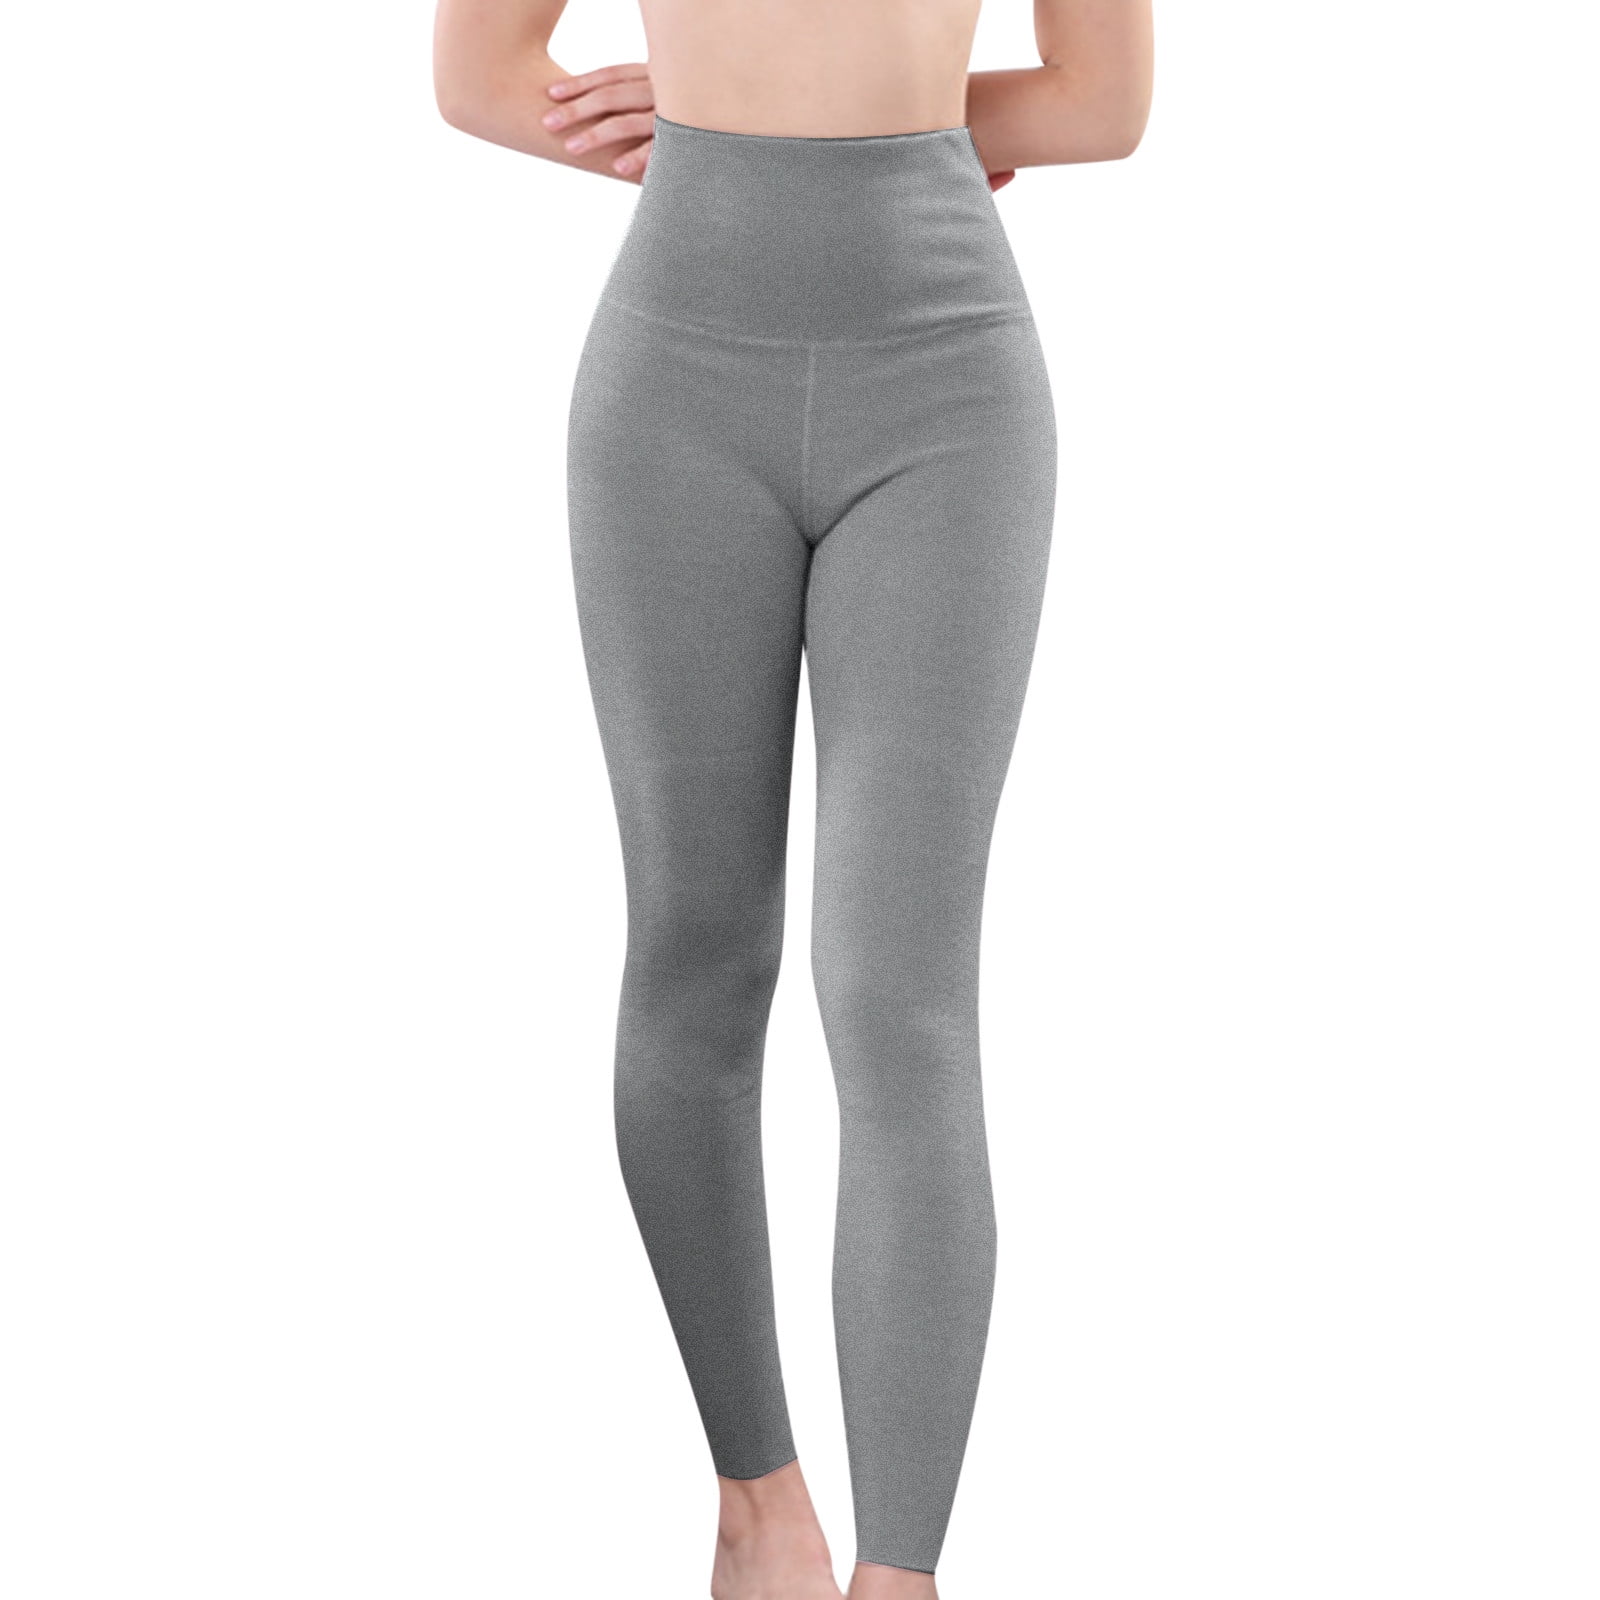 ViCherub Girls Thermal Underwear leggings size S (6-7)